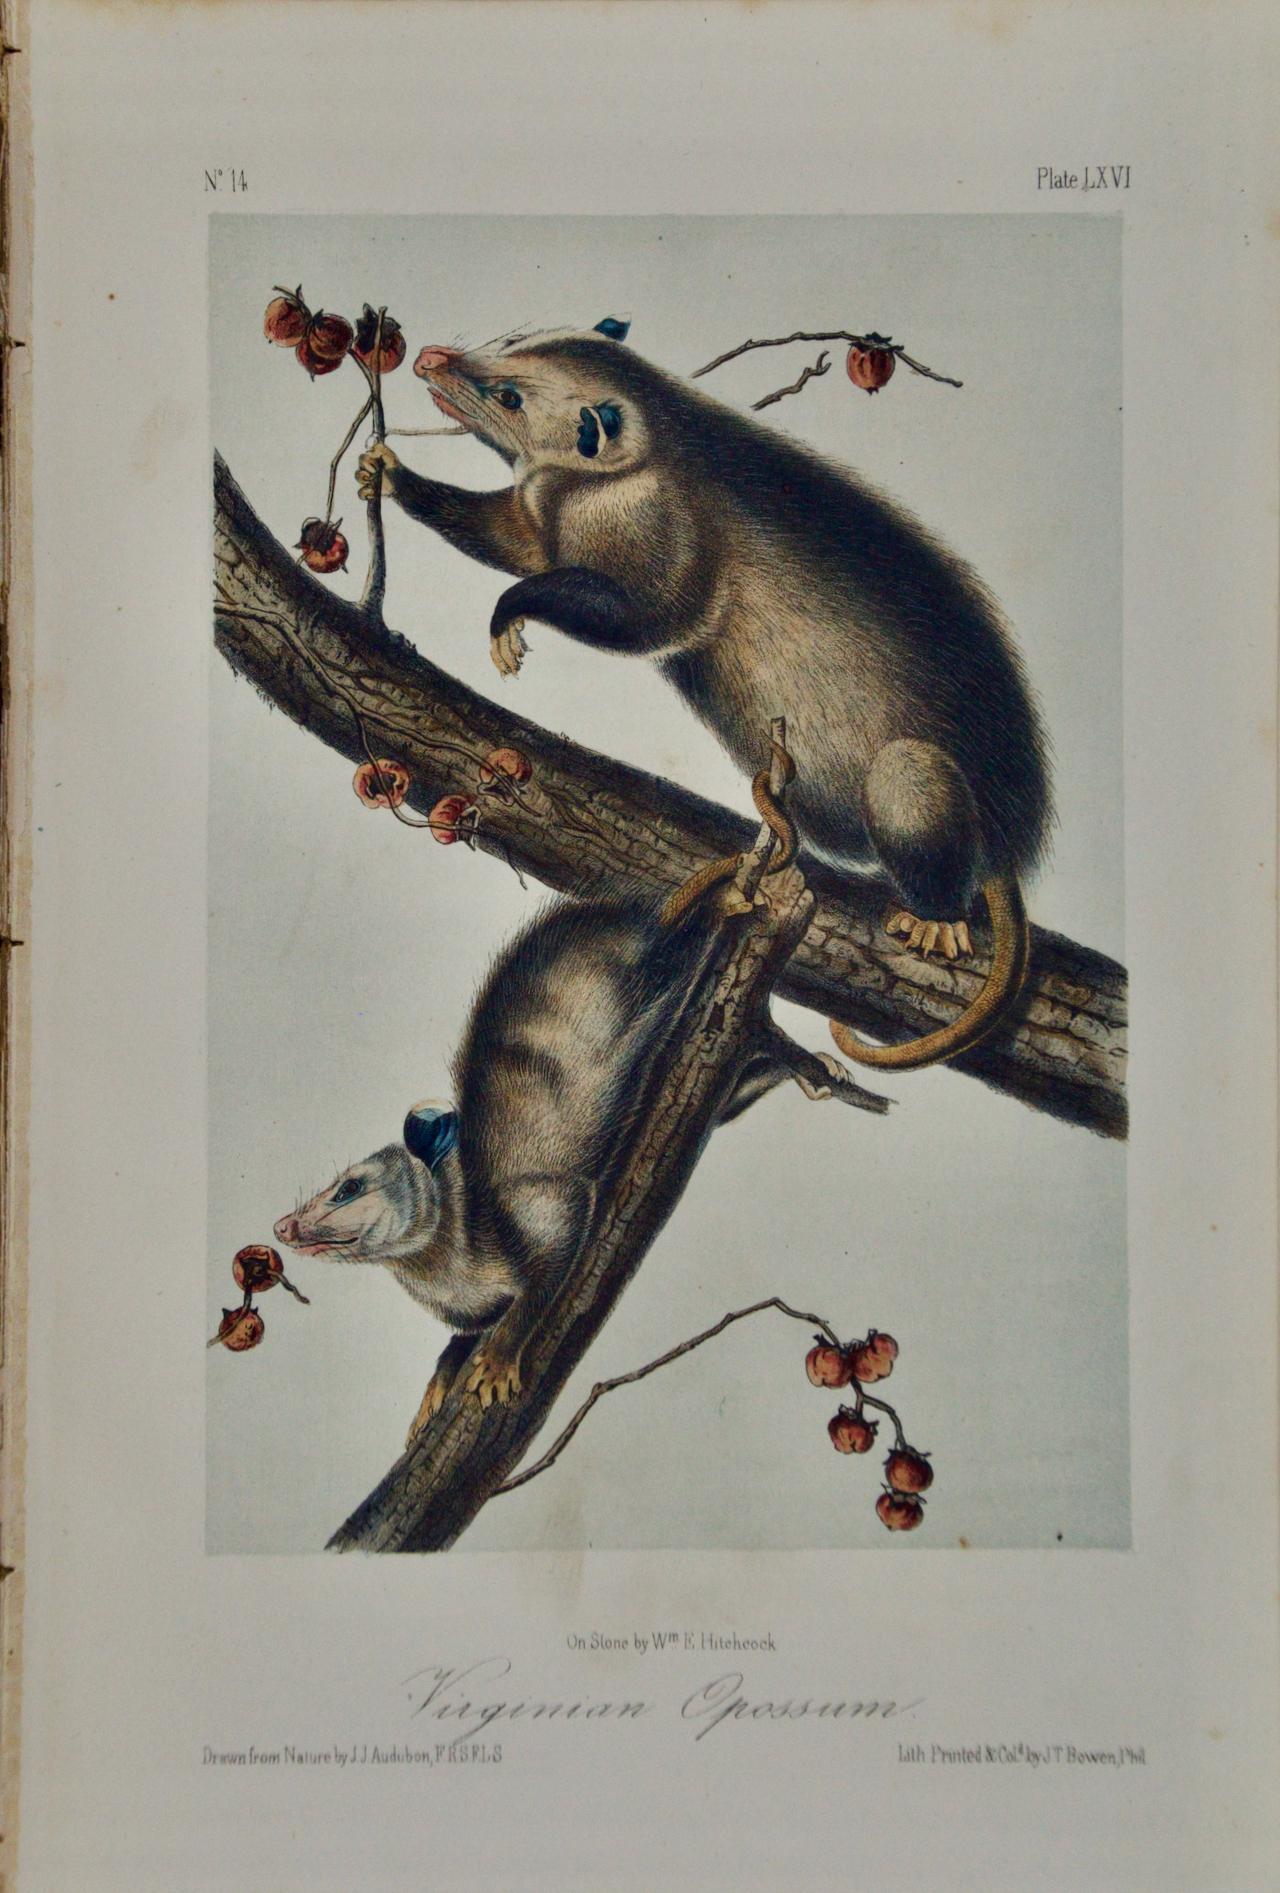 John James Audubon Animal Print - Virginian Opossum: An Original Audubon Hand-colored Lithograph